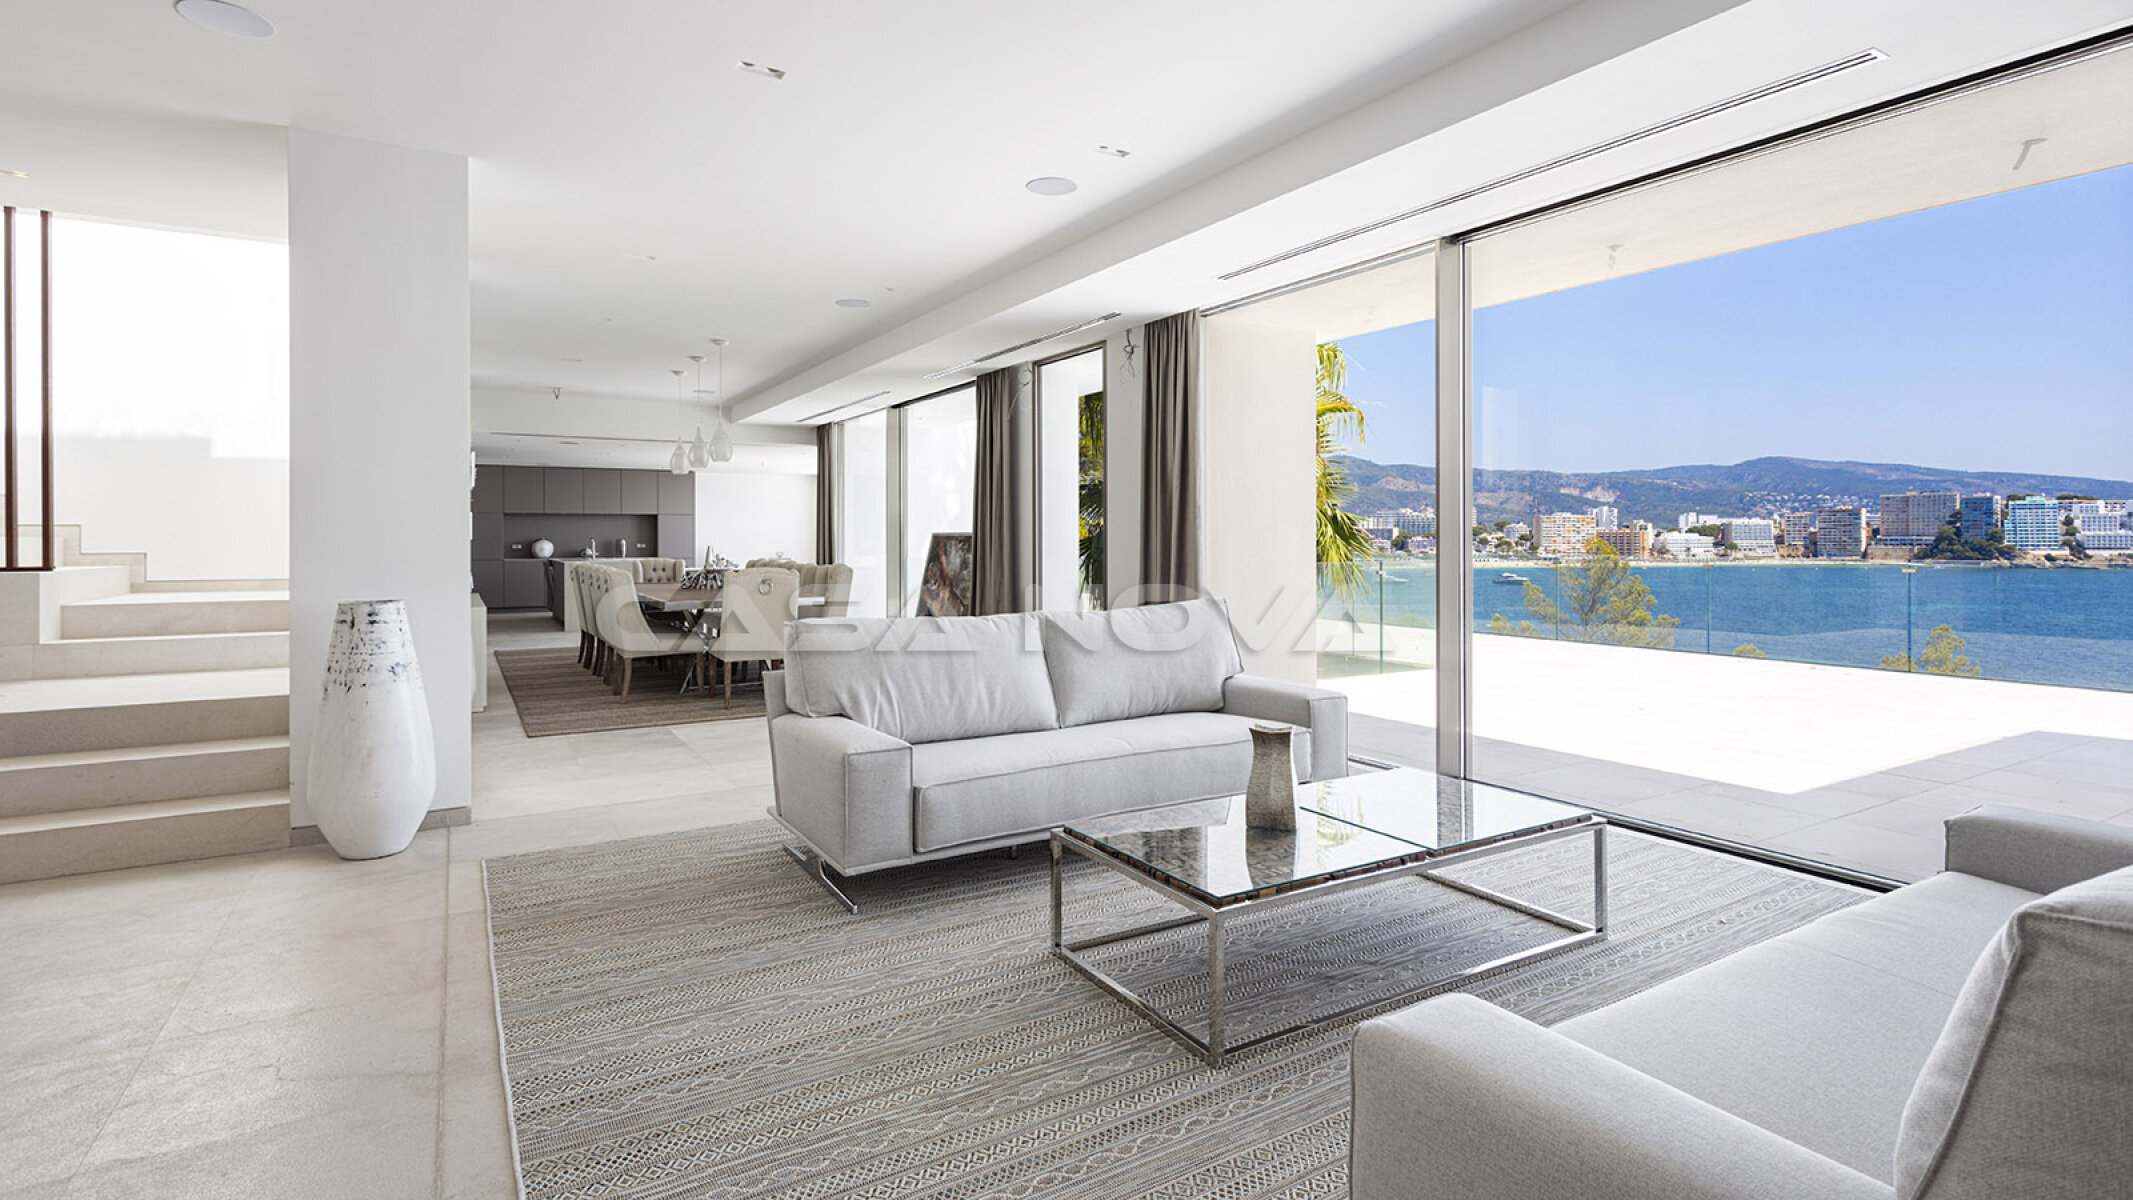 New villa Mallorca in 1st sea line and panoramic view